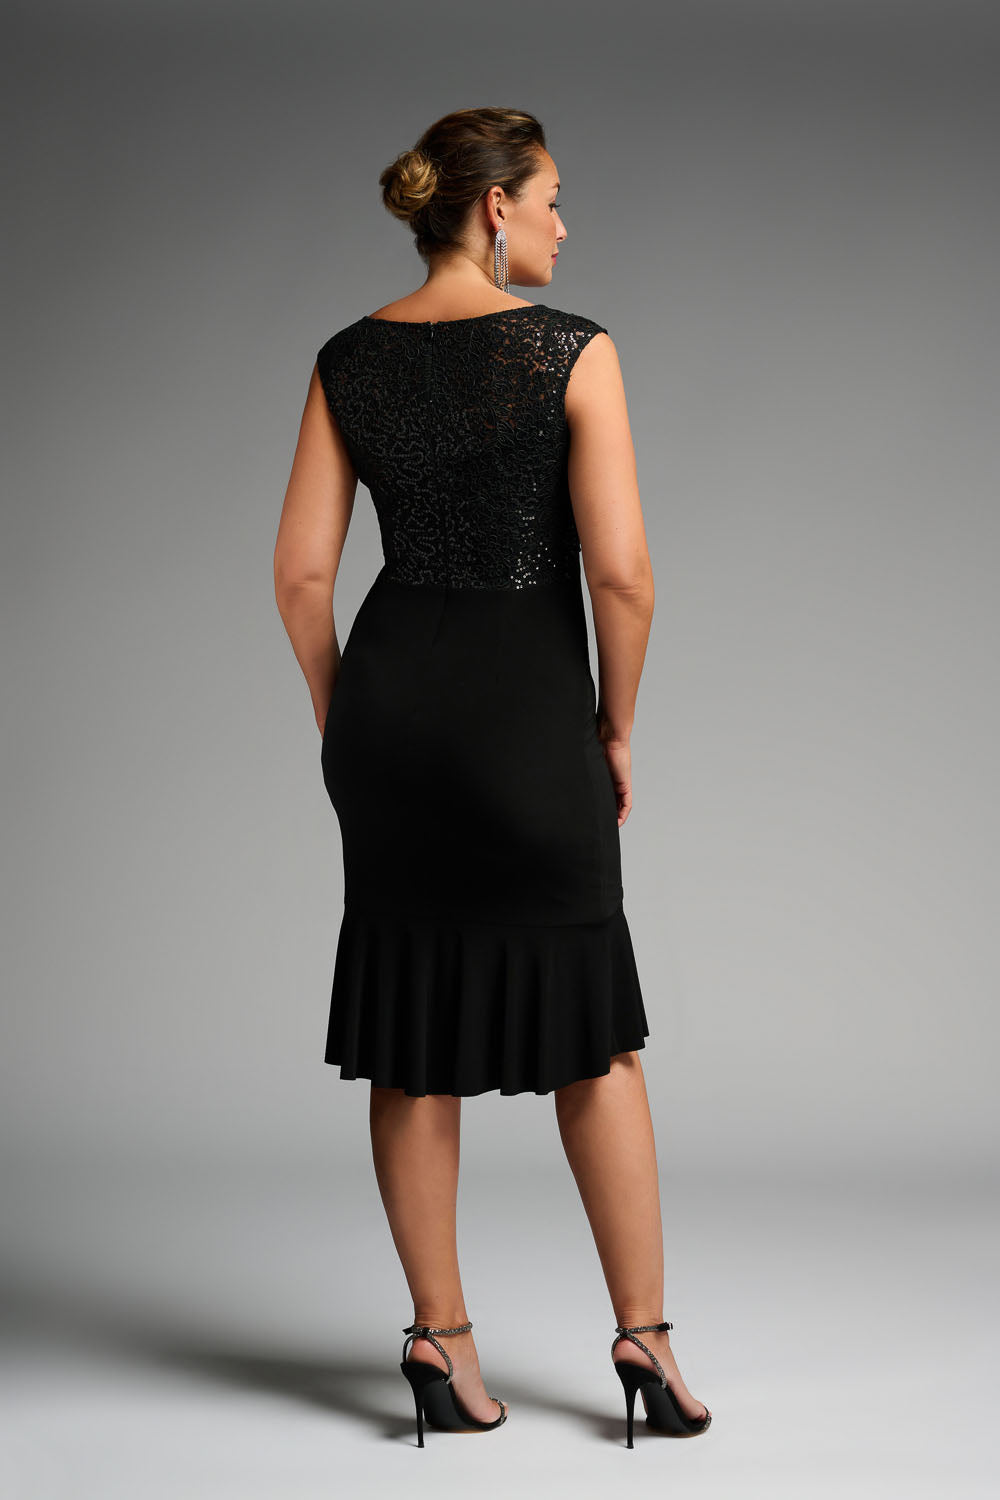 Joseph Ribkoff Black Dress 223721 - ladypenelopeadare.